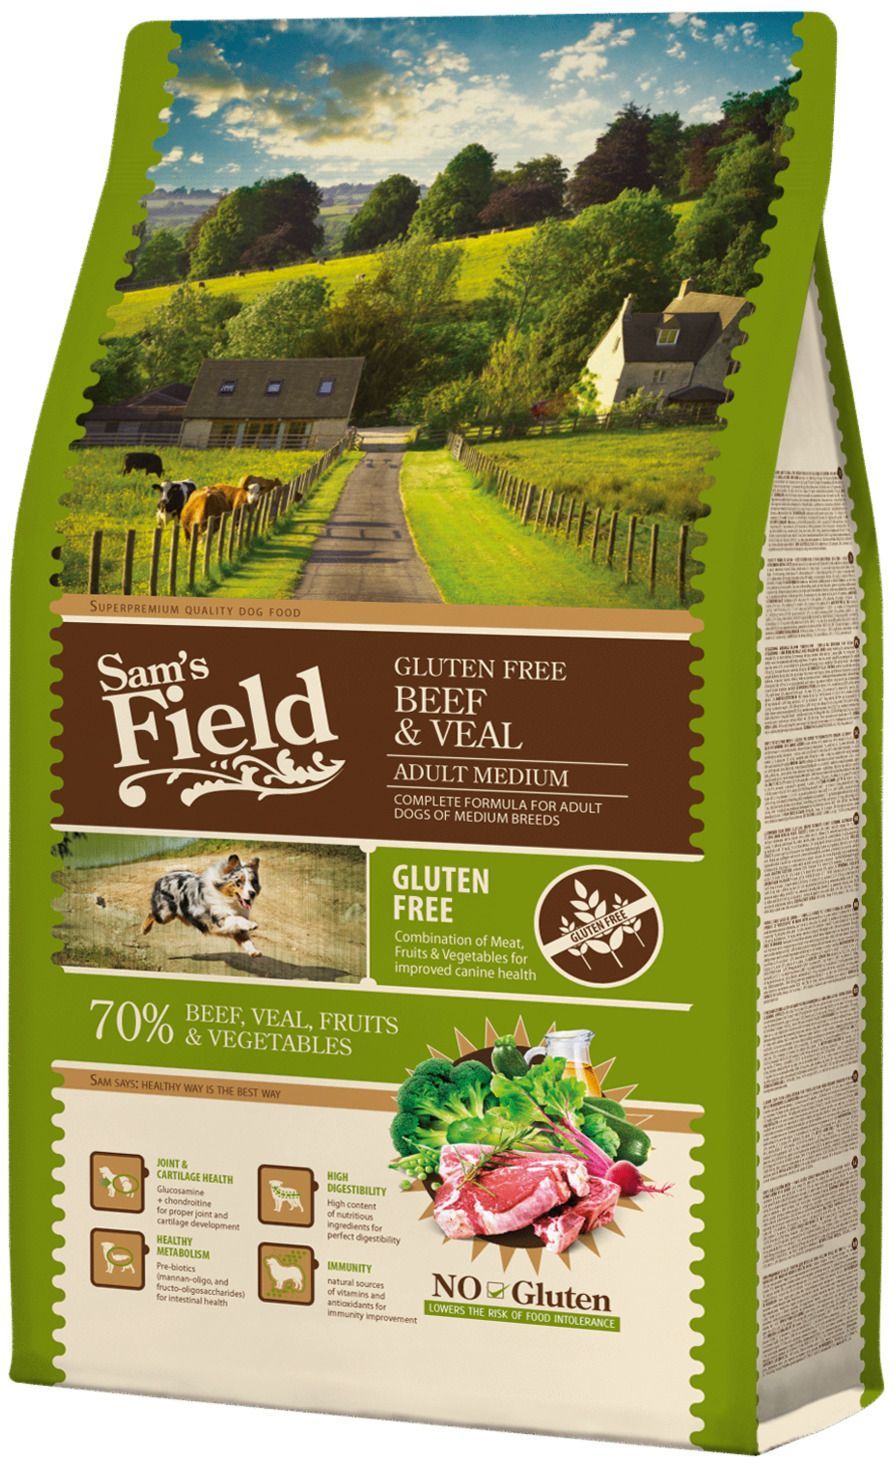 Sam's Field Gluten Free Adult Medium Beef & Veal - zoom